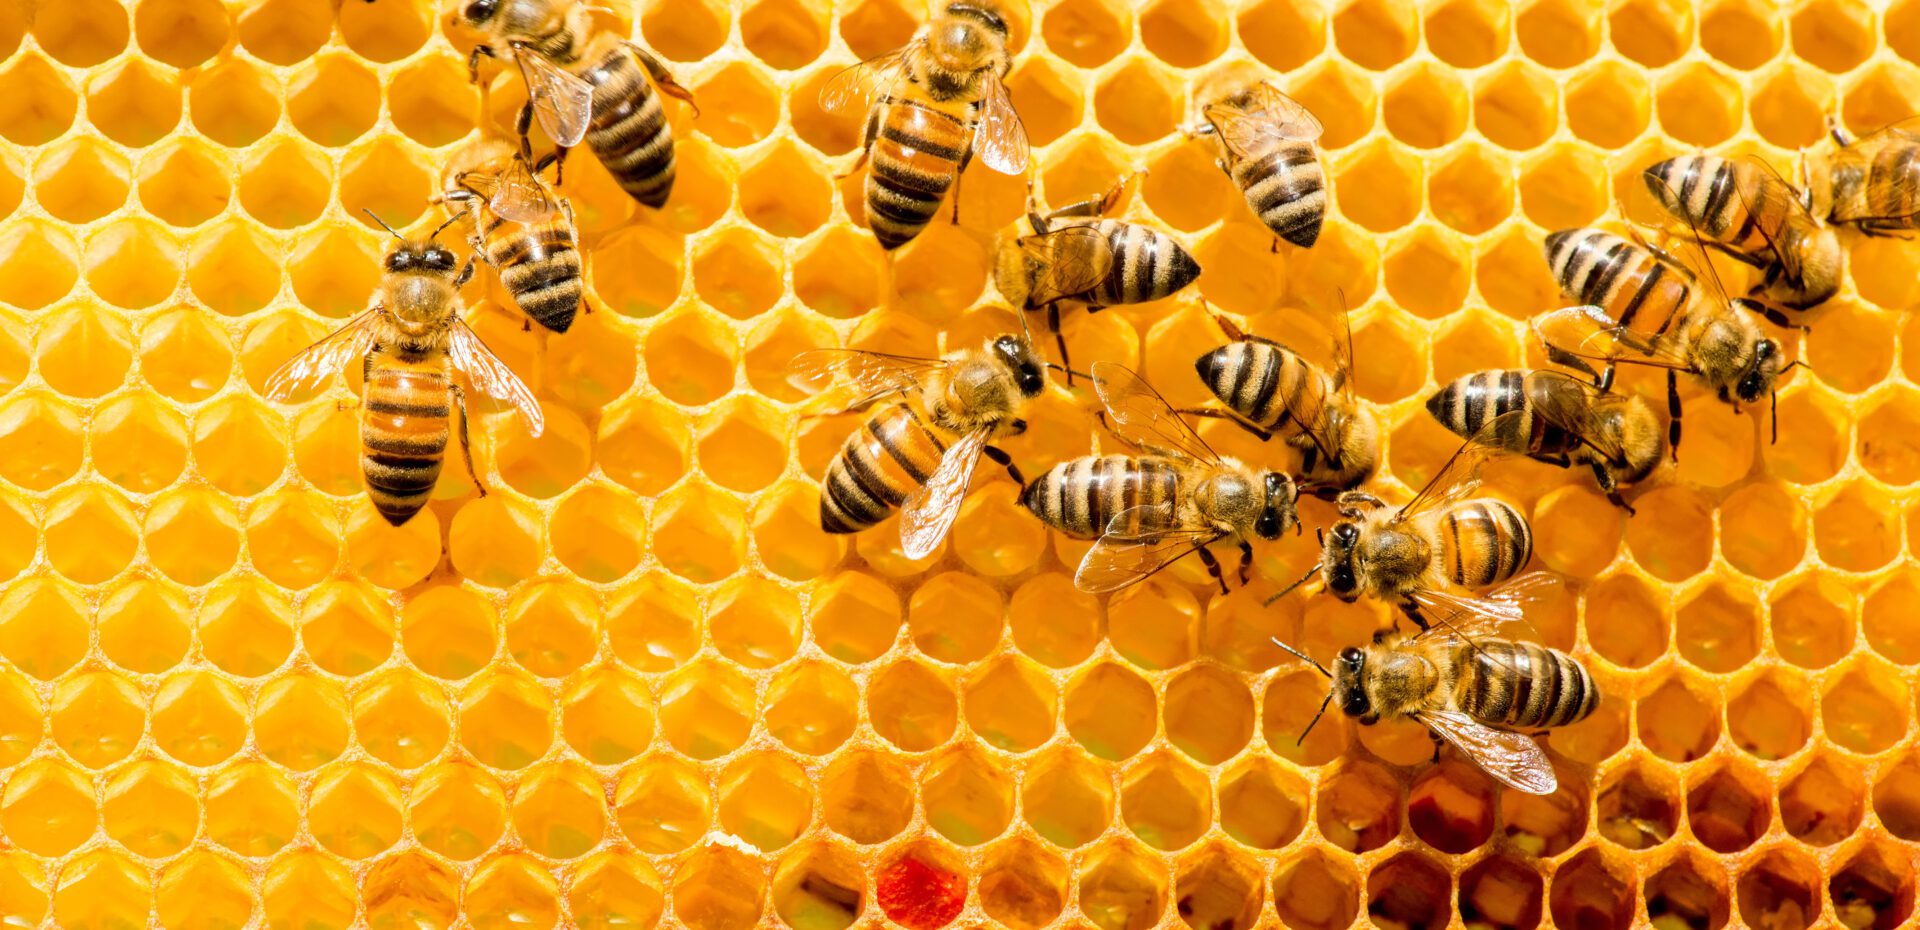 Closeup shot of the Honey bees